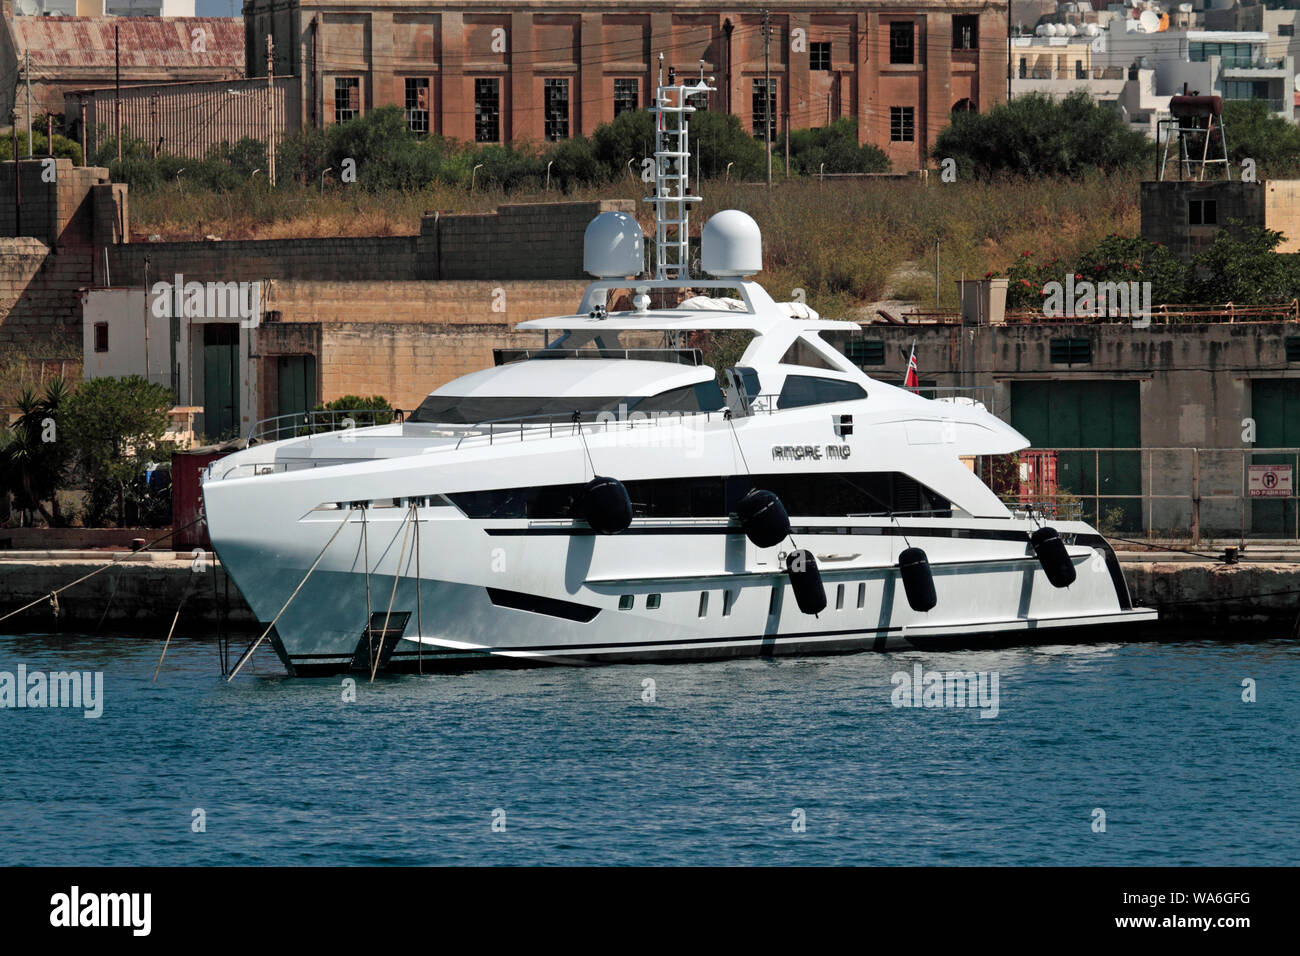 La superyacht Heesen 45 metros Amore Mio en Ta' Xbiex, Malta Foto de stock